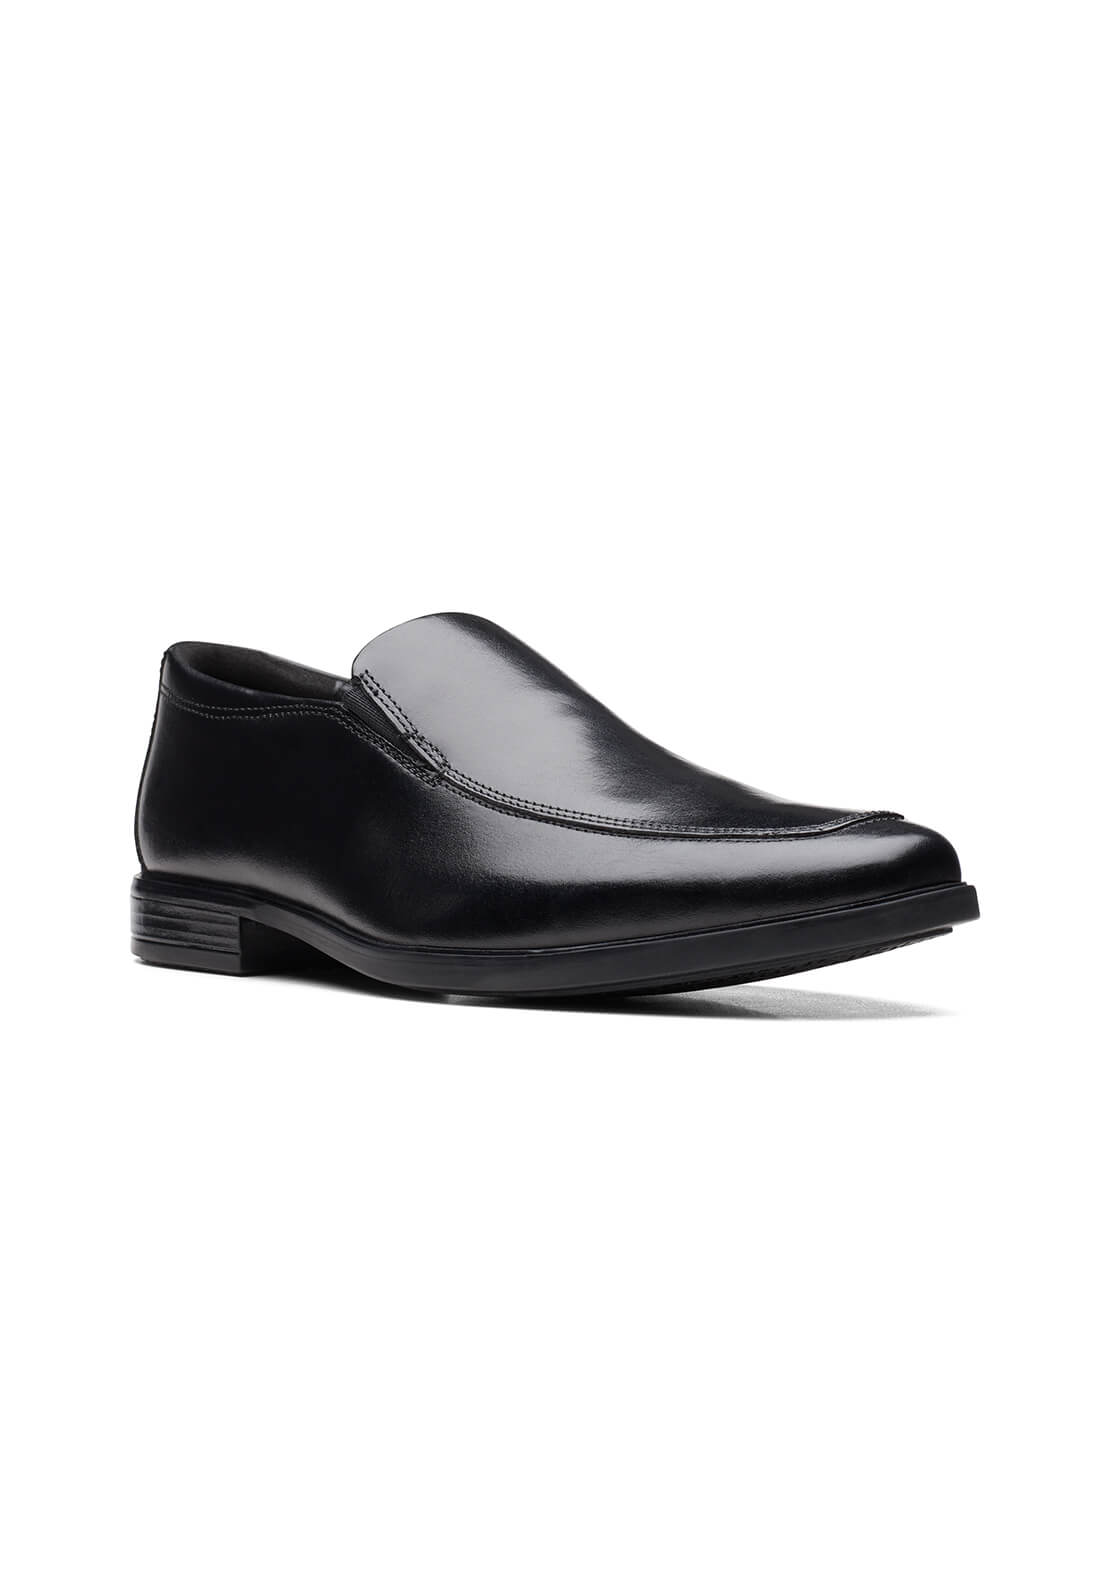 Clarks Howard Edge Formal Shoe - Black 1 Shaws Department Stores